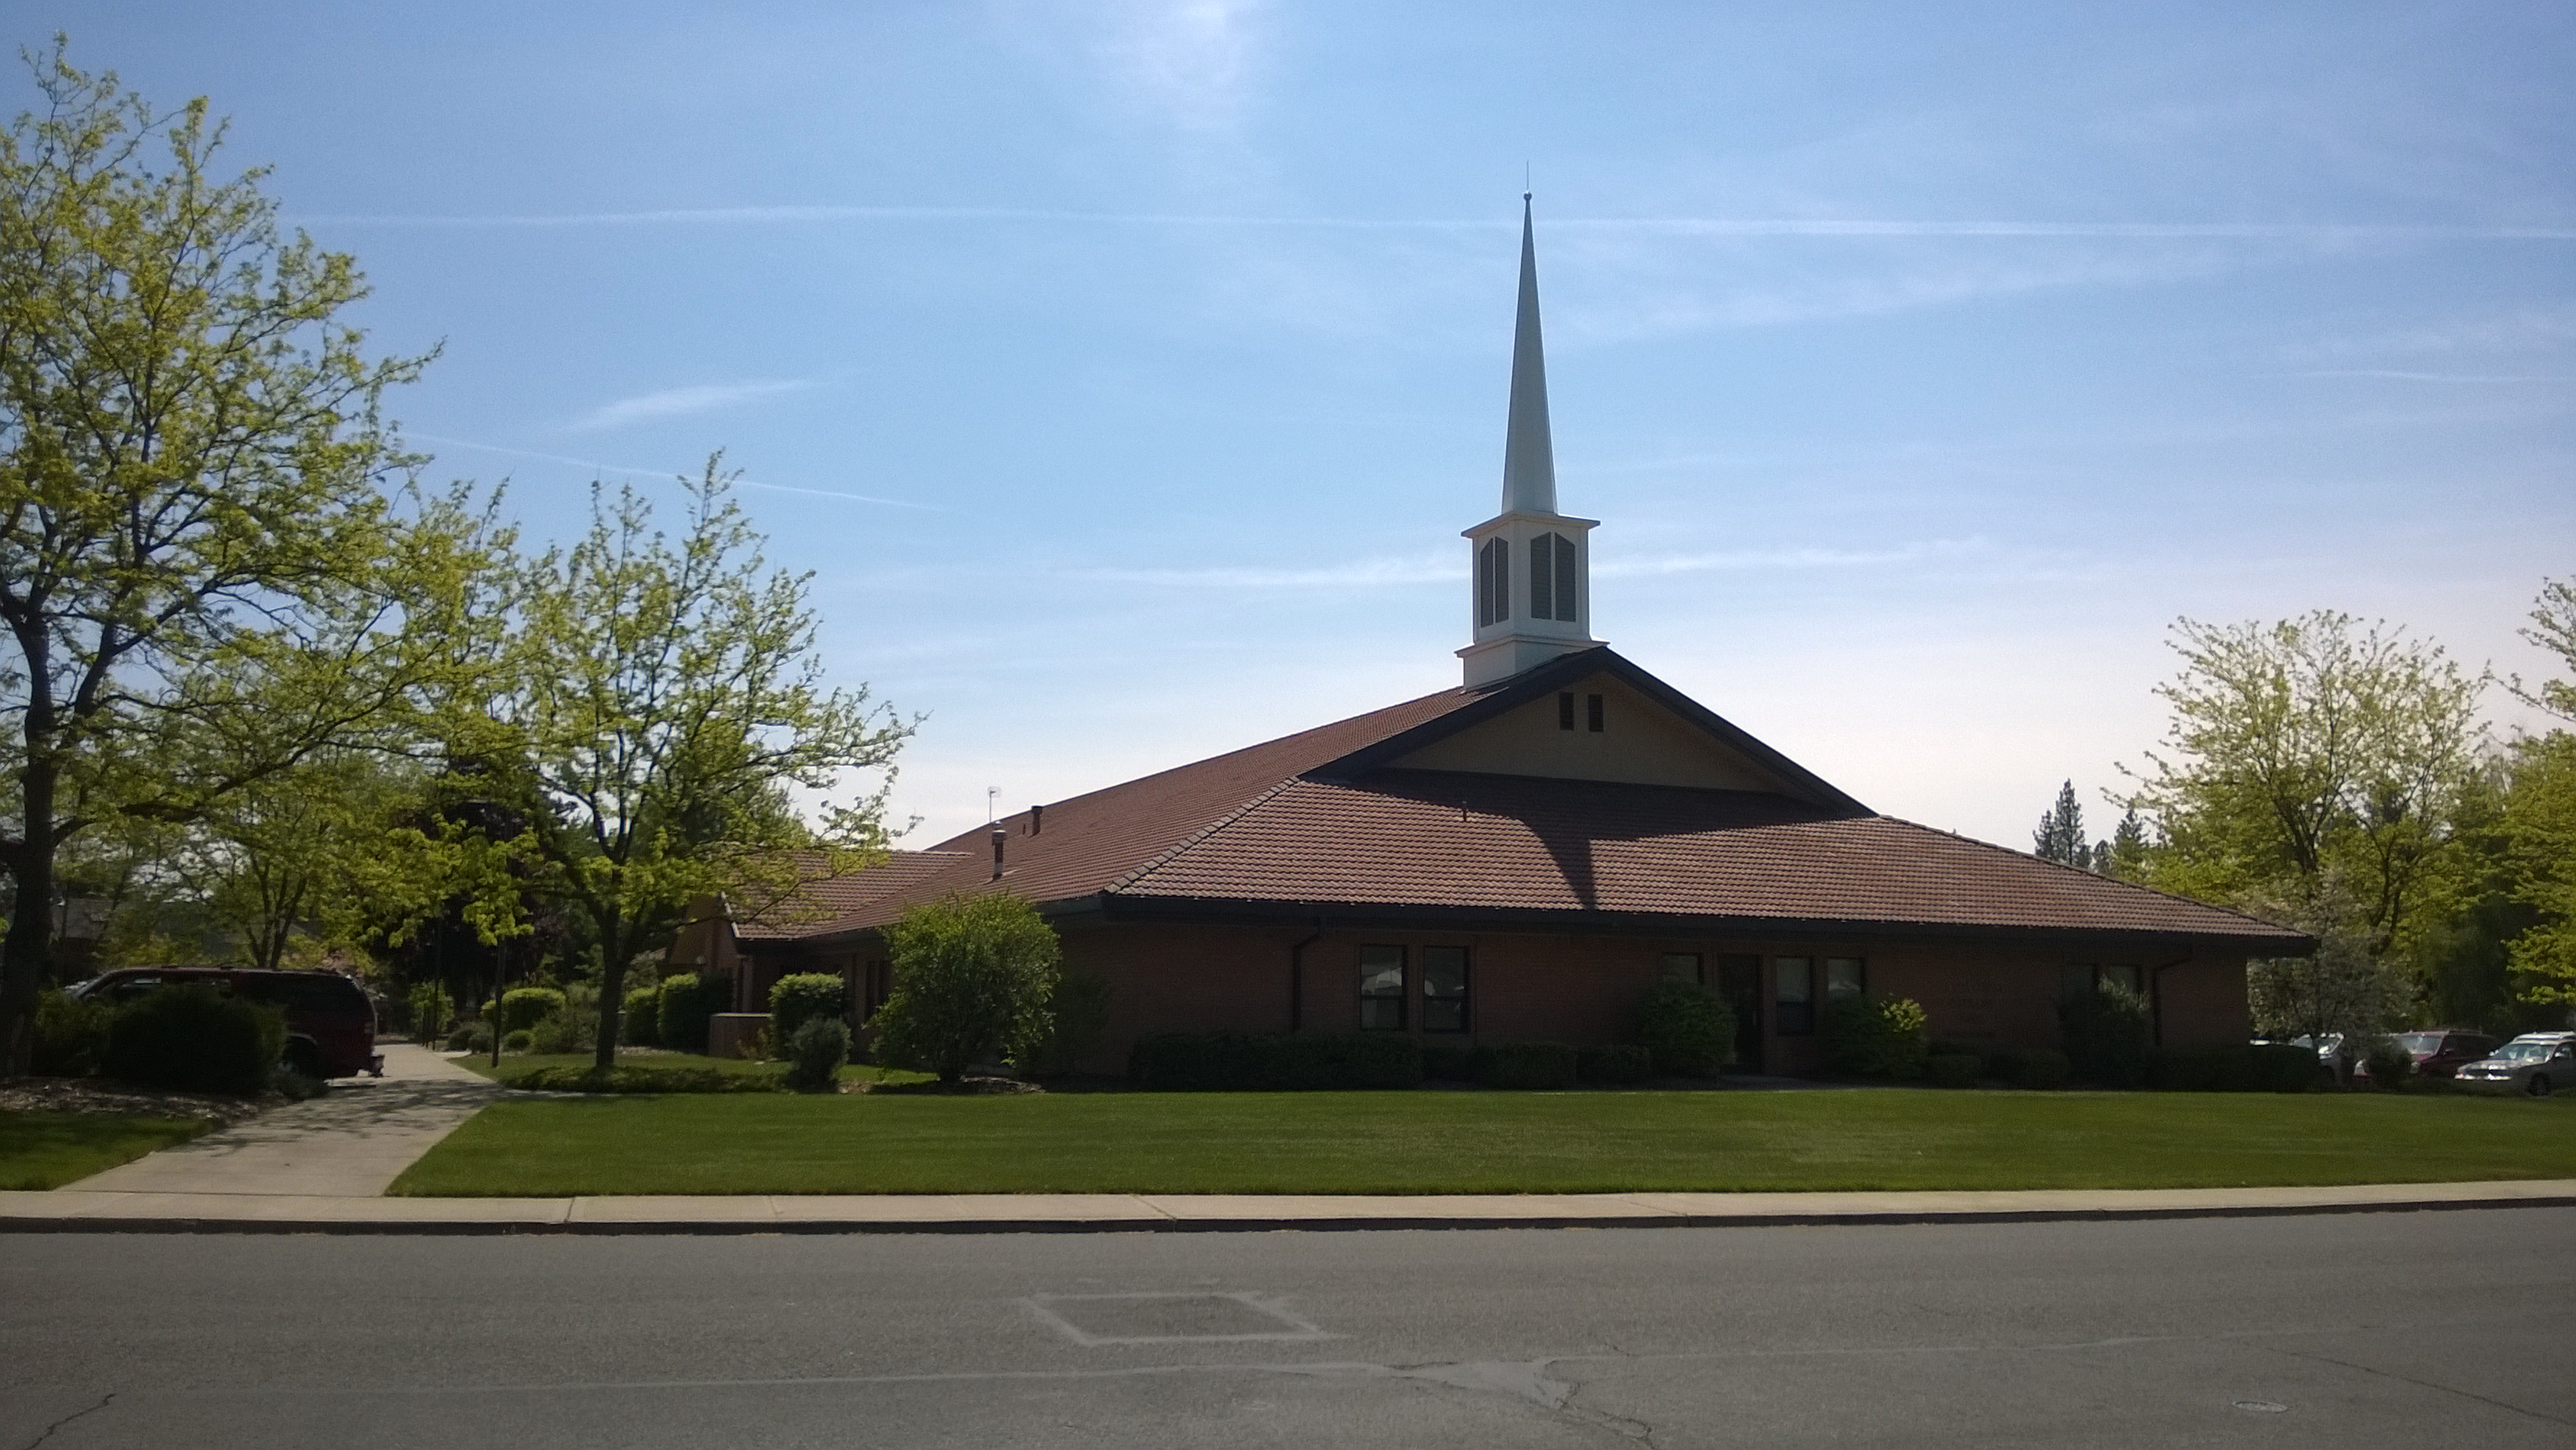 The Church of Jesus Christ of Latter-day Saints | 5001 W Shawnee Ave, Spokane, WA, 99208 | +1 (509) 467-2534